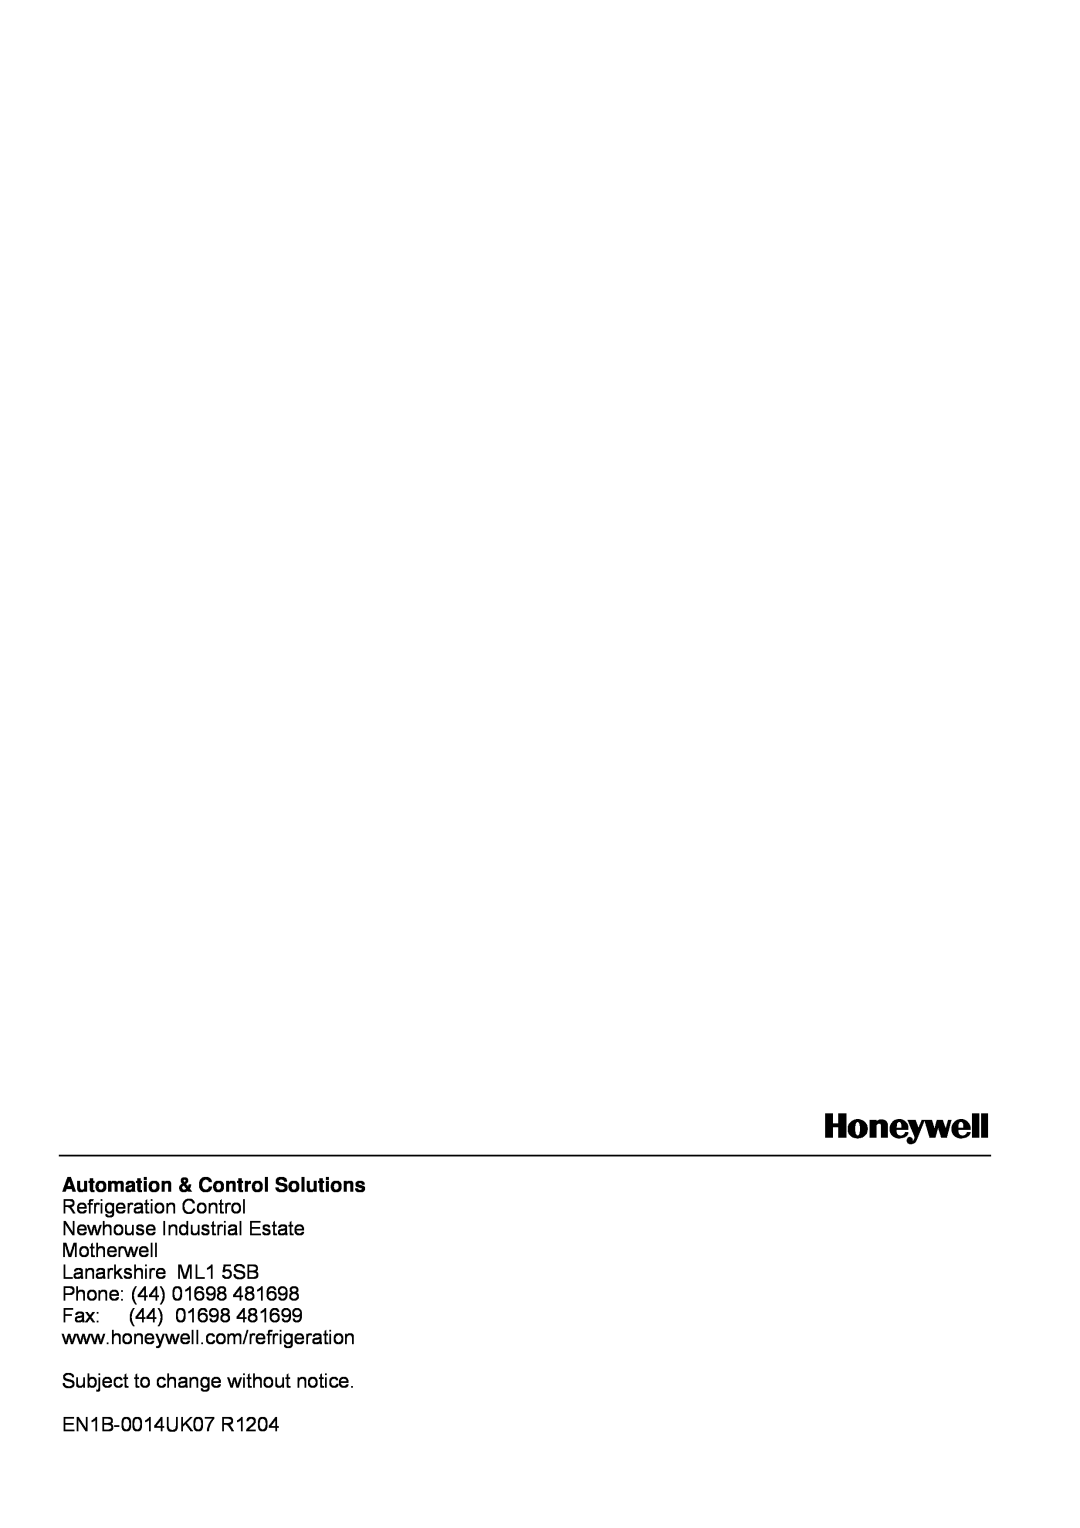 Honeywell SN0500 manual Subject to change without notice, EN1B-0014UK07R1204 